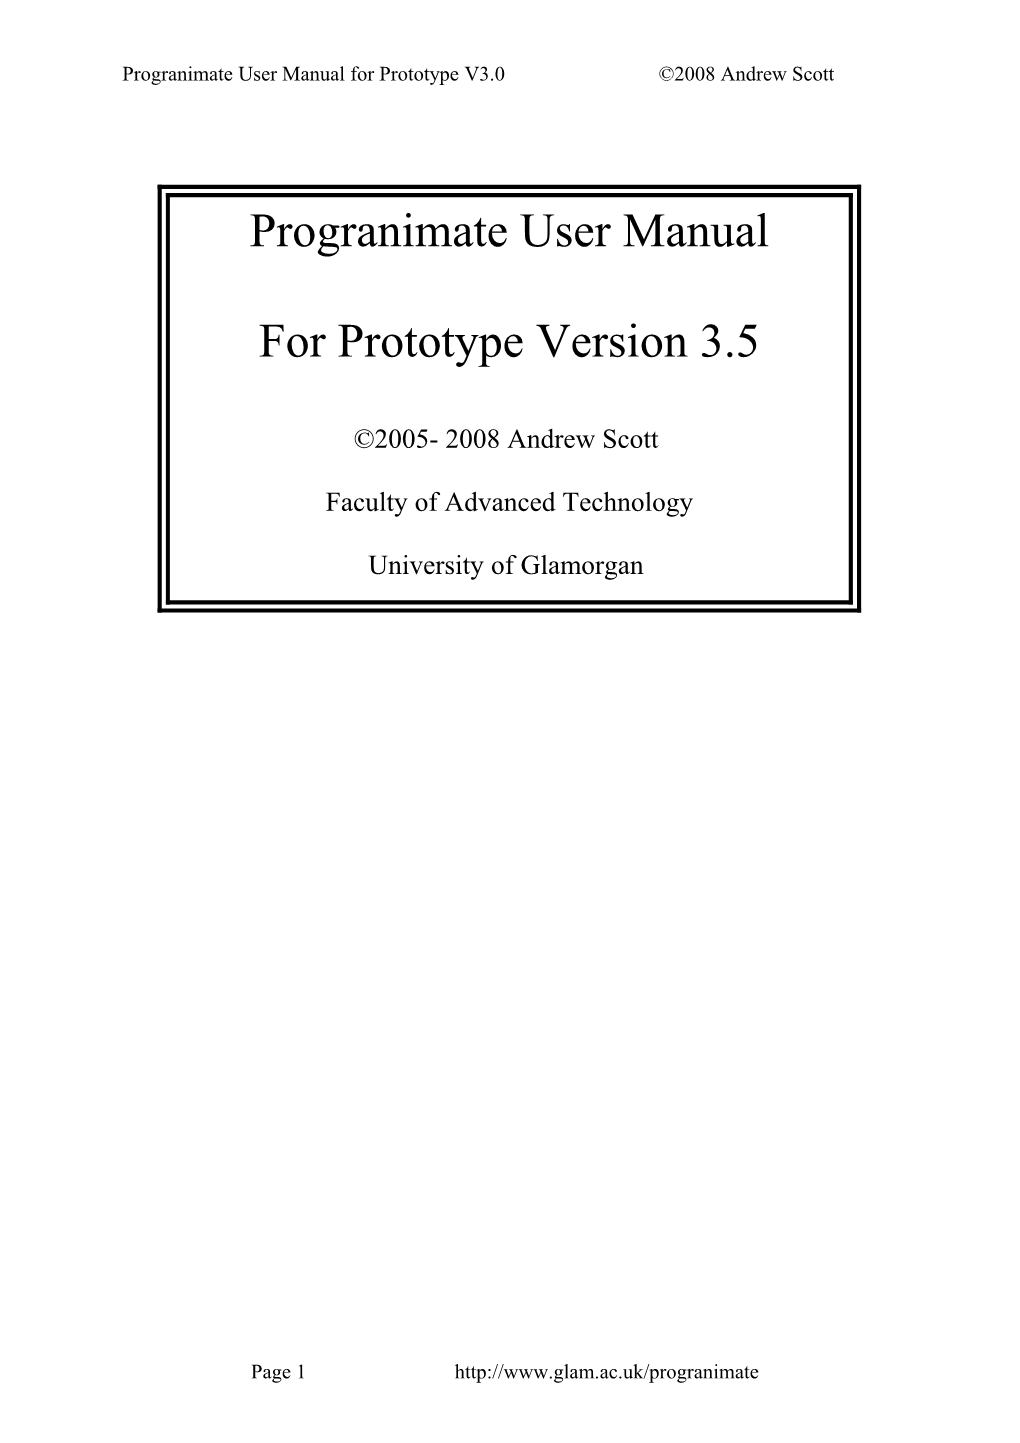 Progranimate User Manual